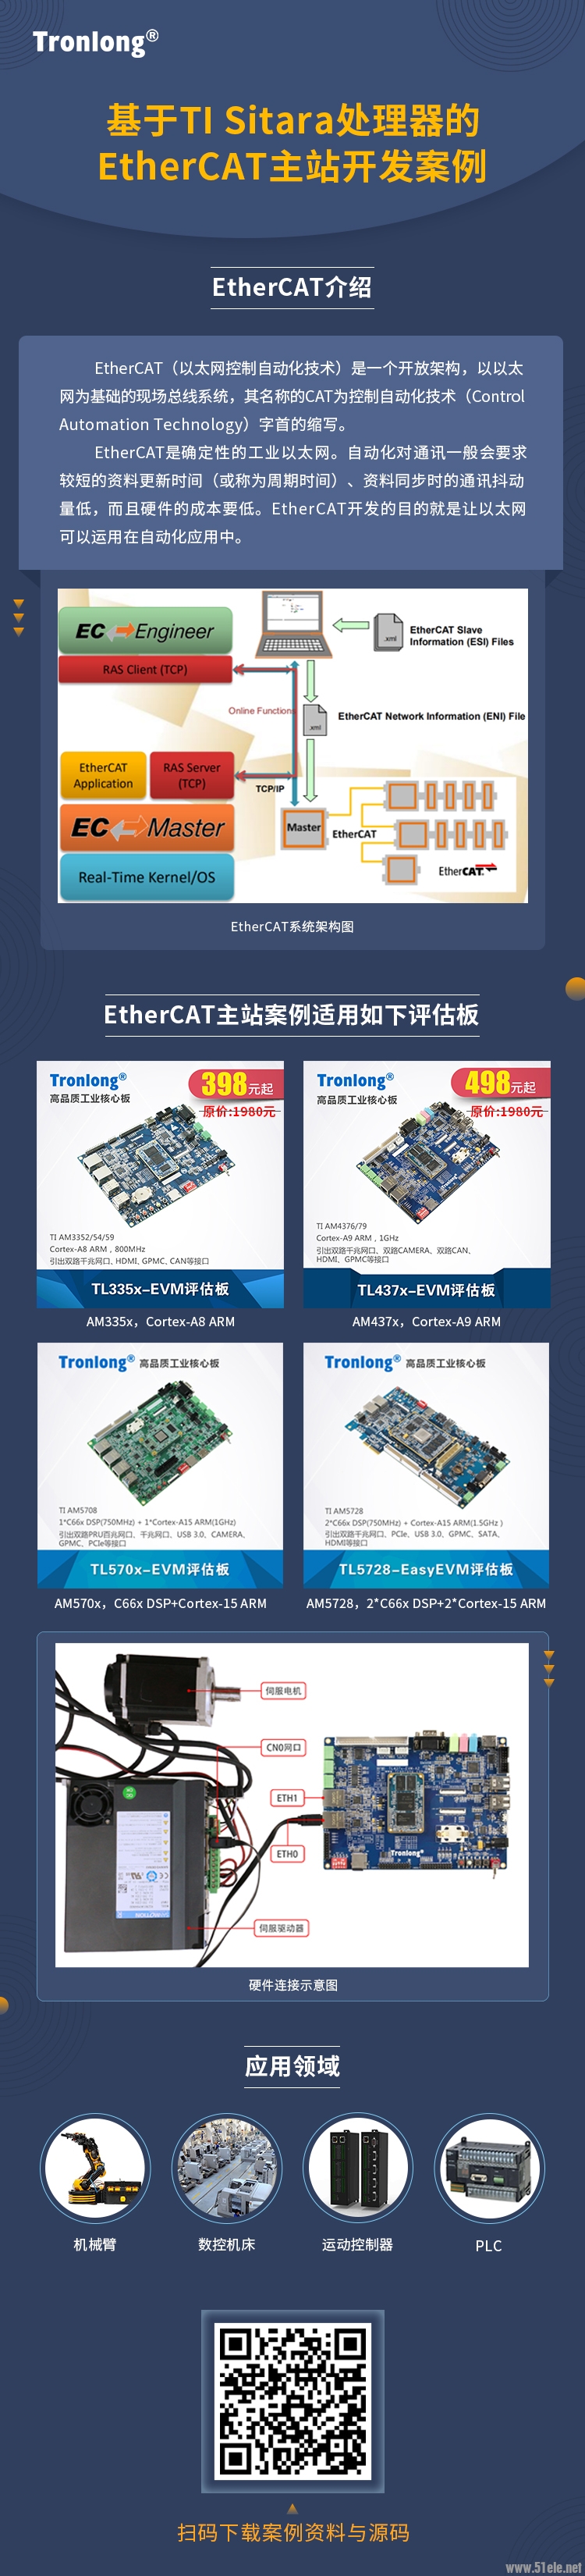 EtherCAT主站开发案例 (1).jpg